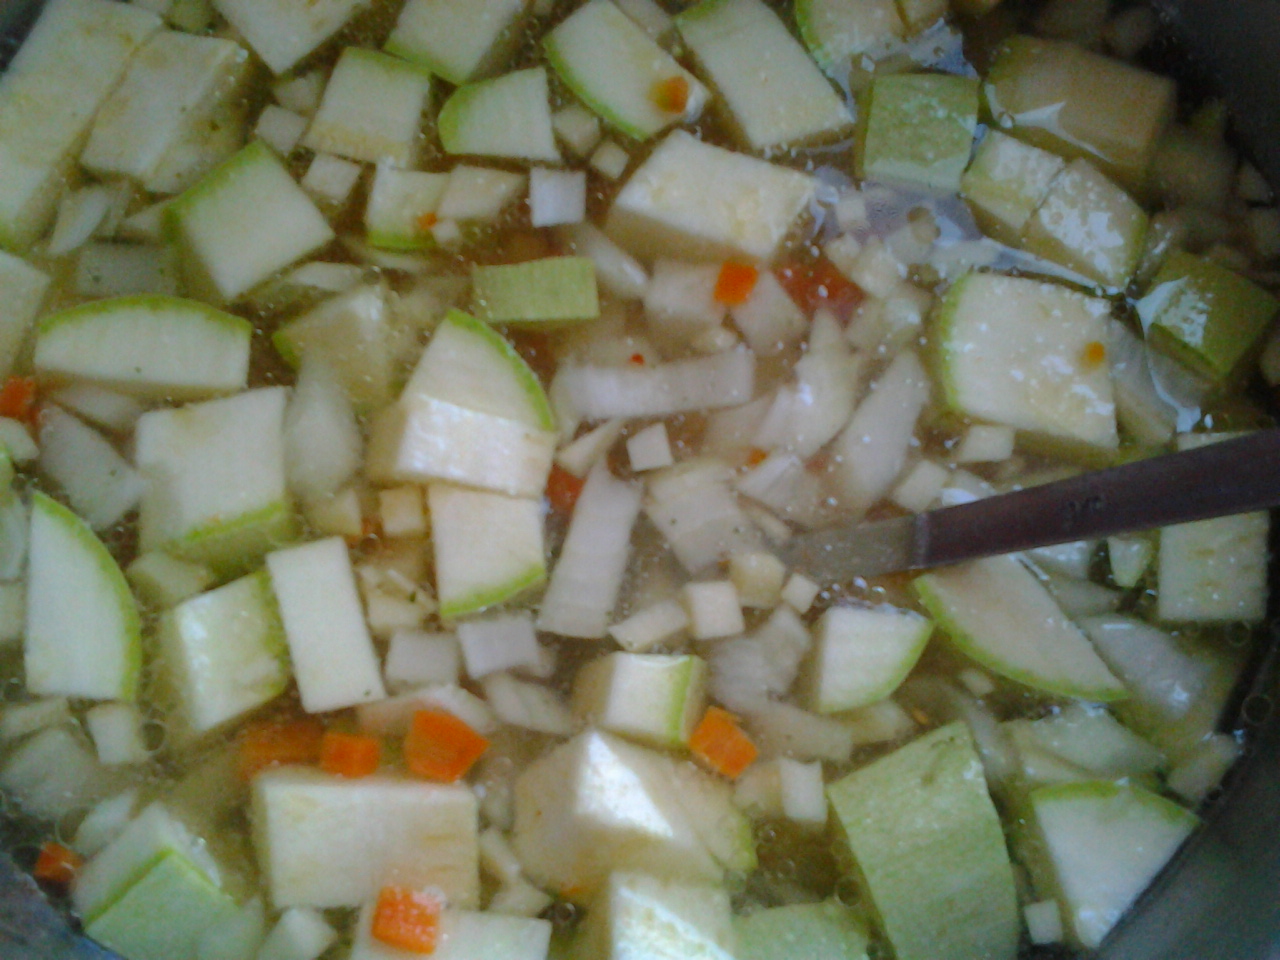 Supa-crema de legume